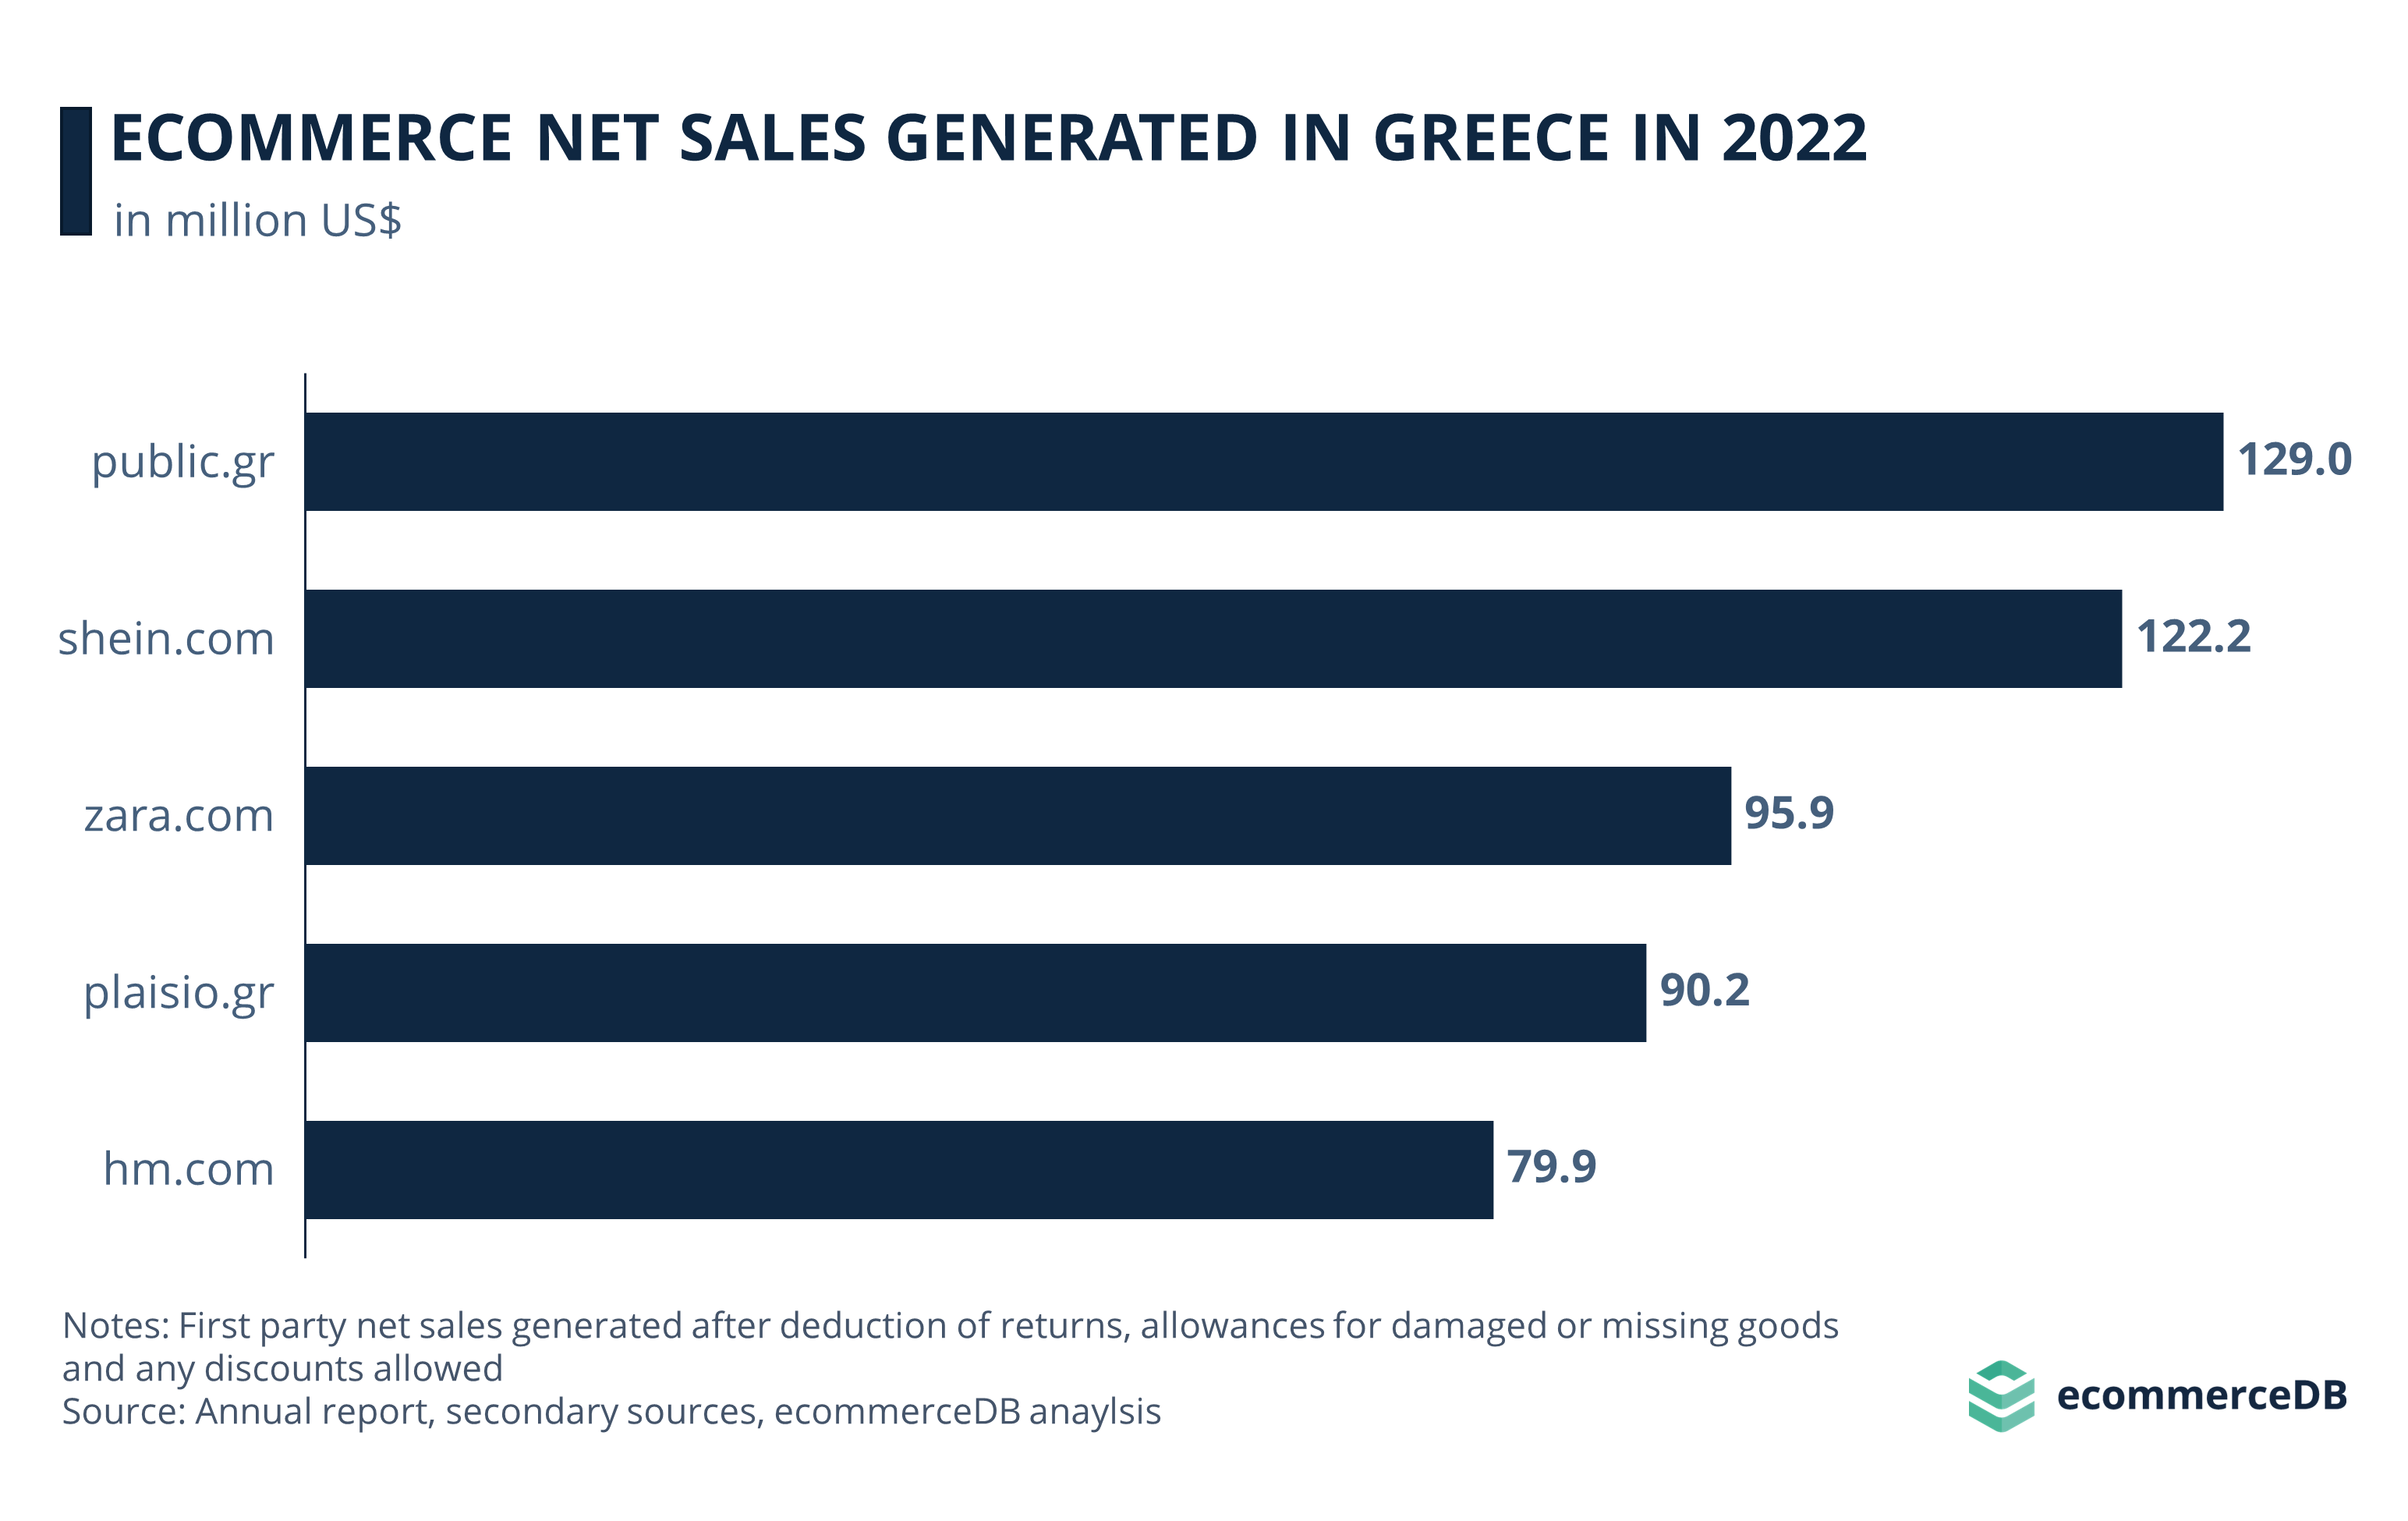 Top 5 Stores eCommerce Net Sales in Greece